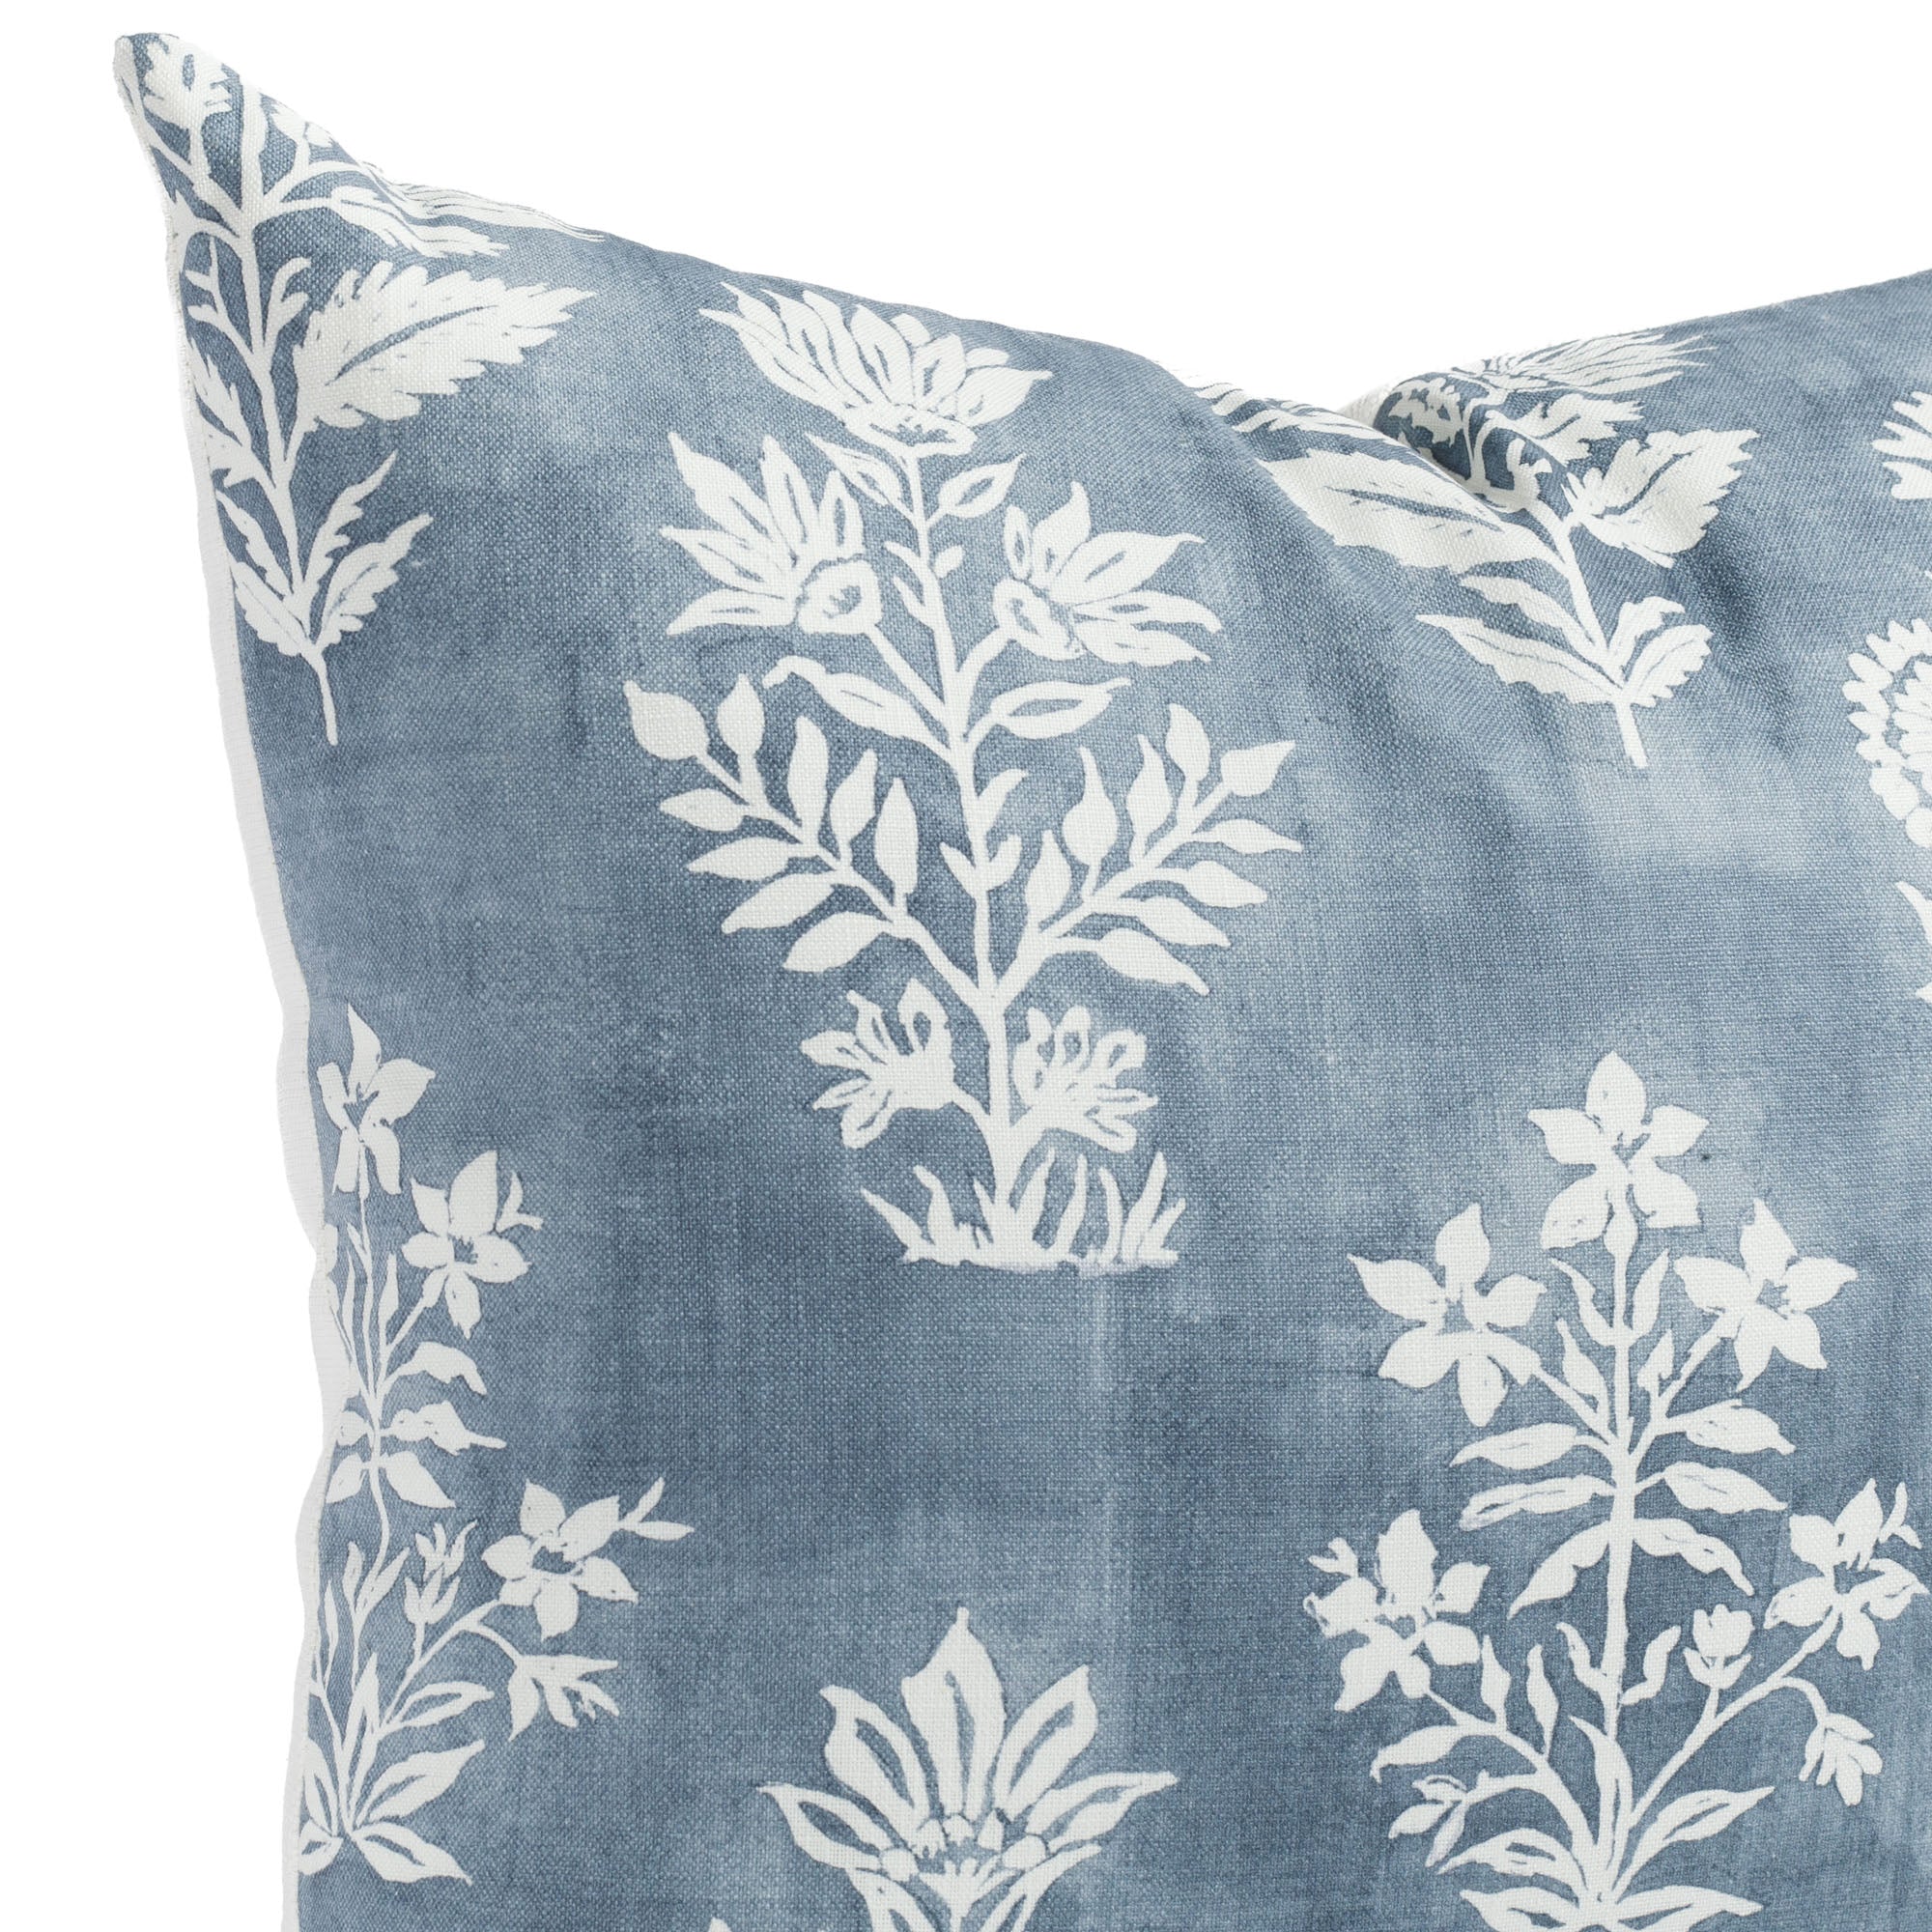  an indigo blue and white batik floral print throw pillow : Corner detail